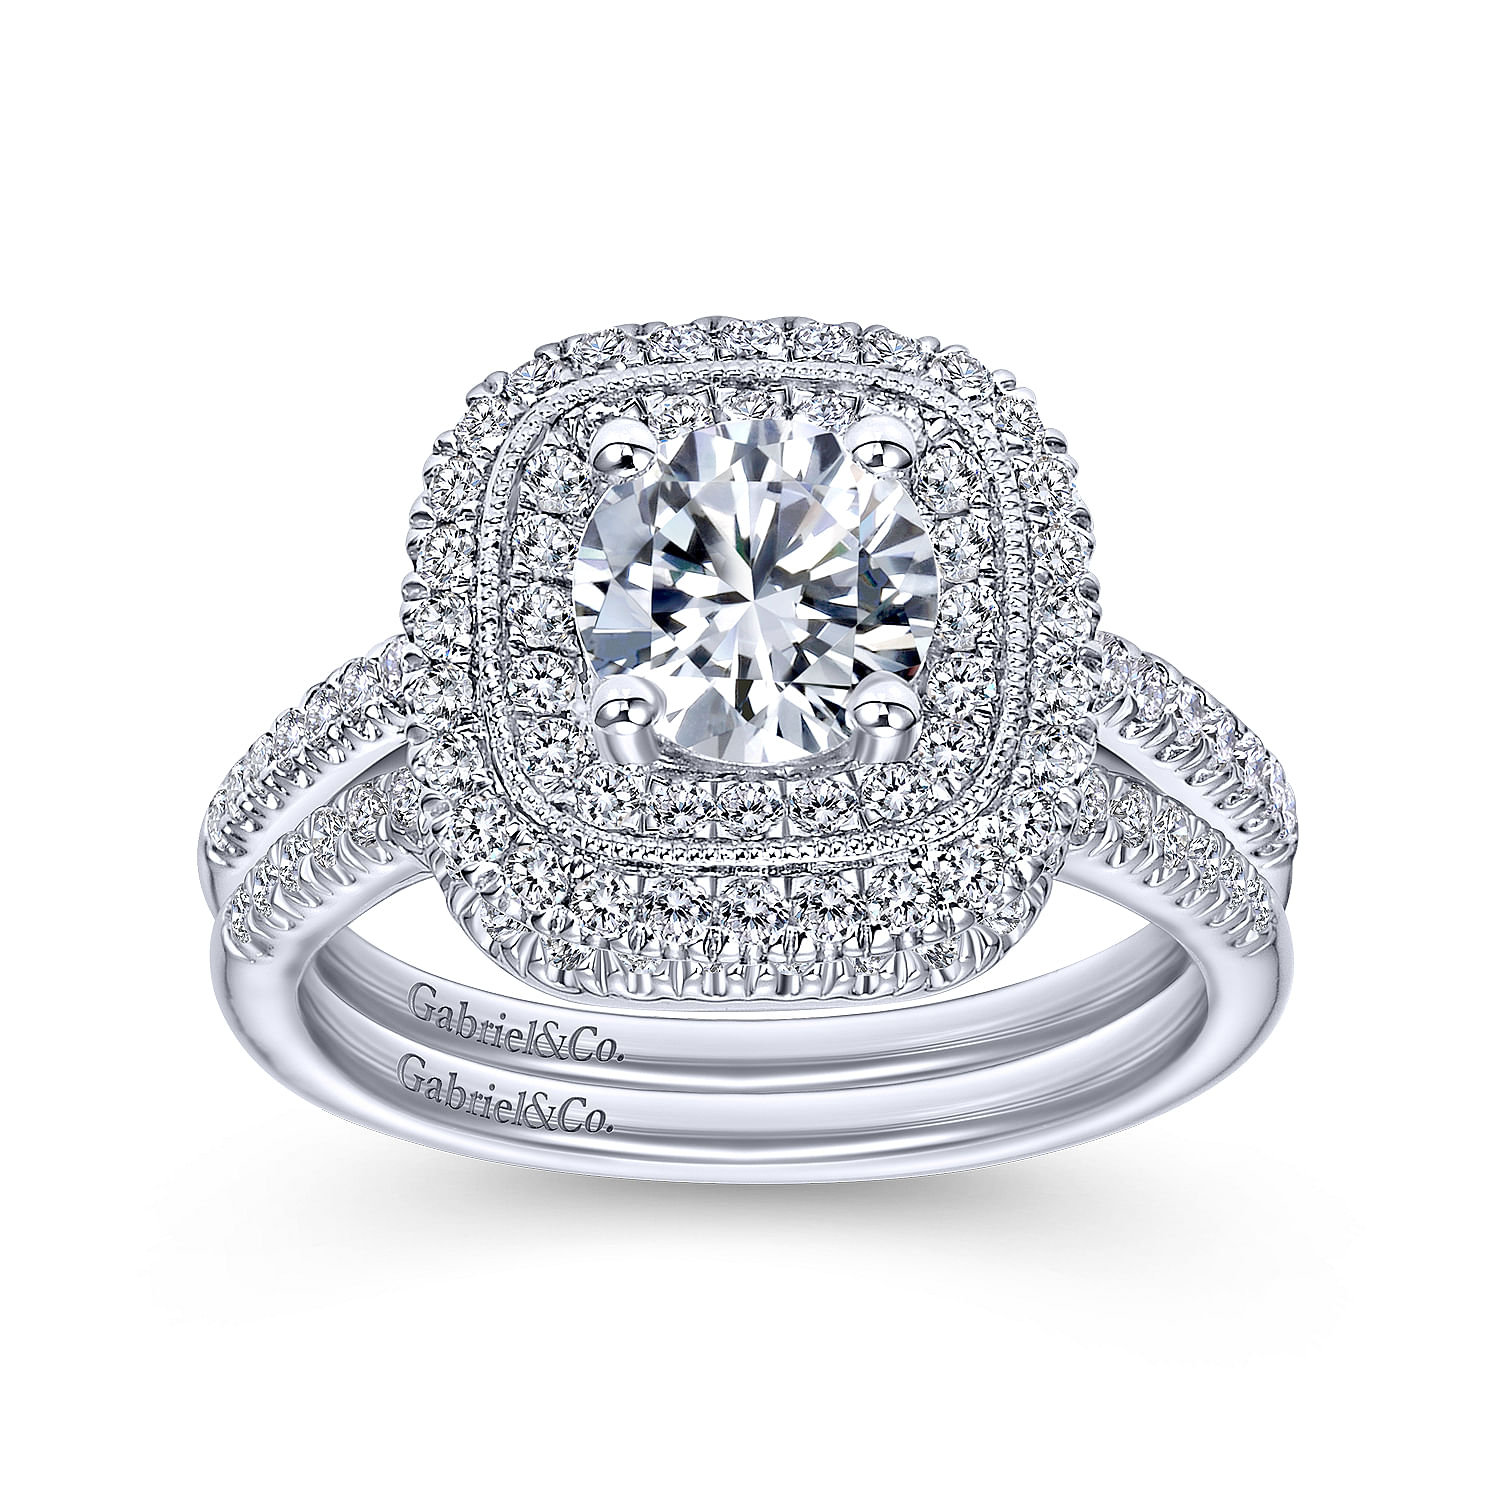 Vintage Inspired 14K White Gold Round Double Halo Diamond Engagement Ring